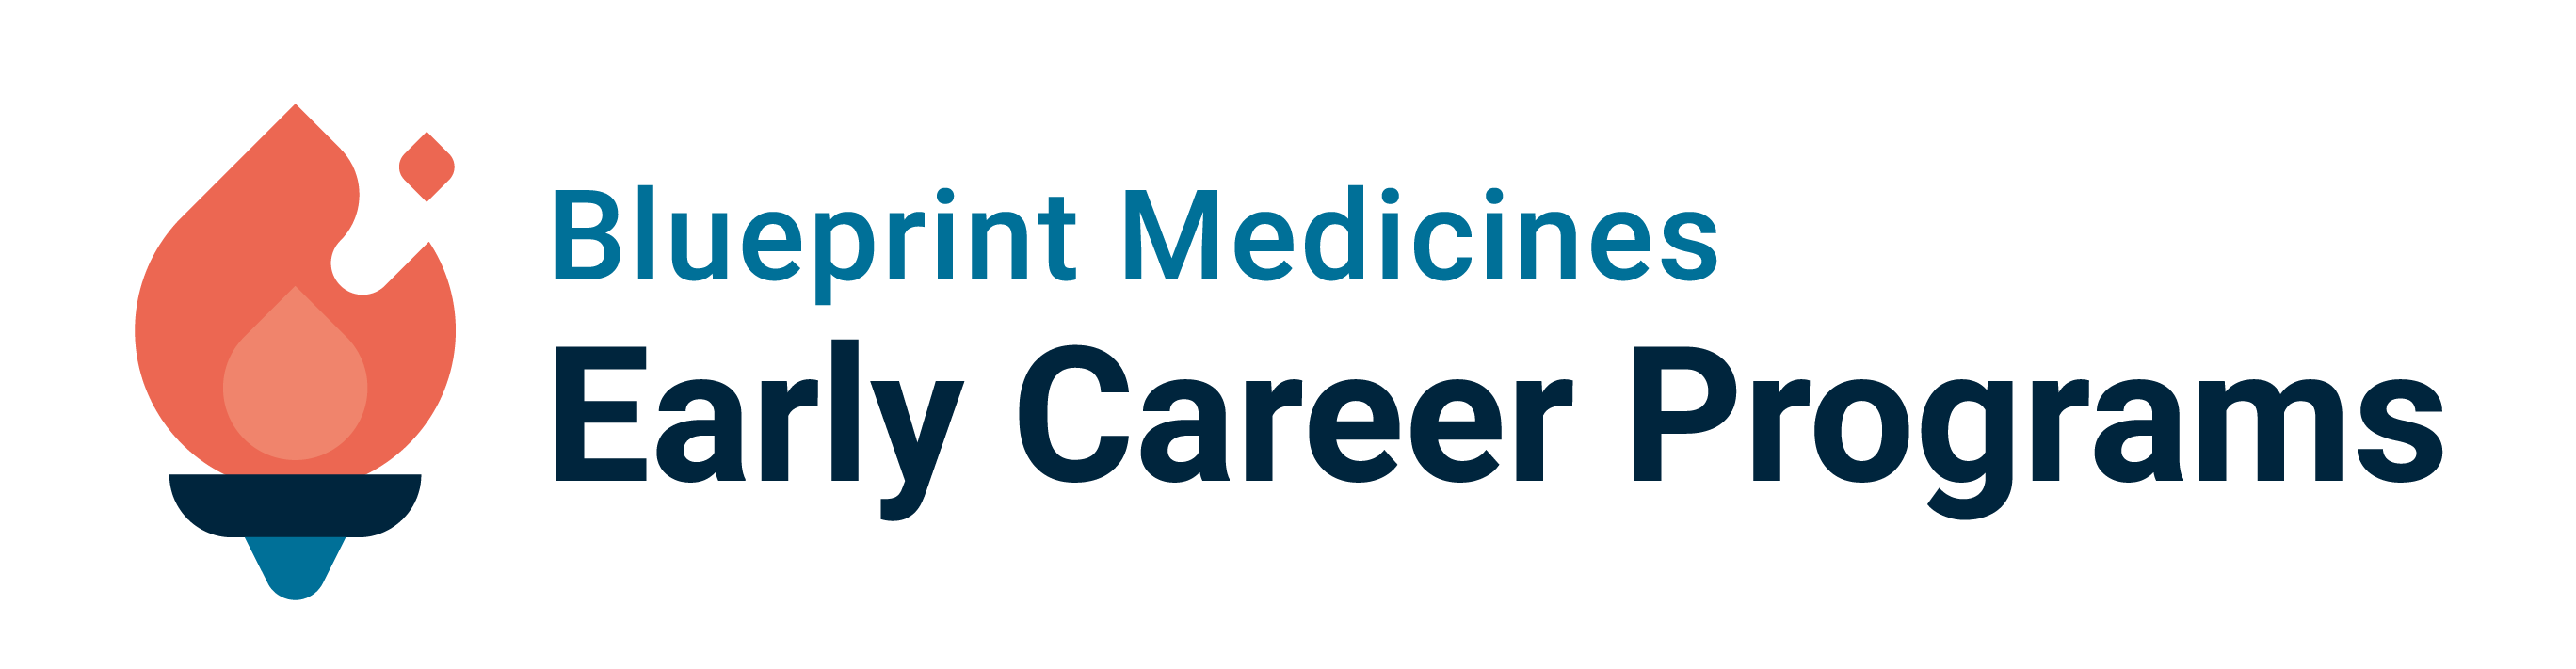 Early careers program logo